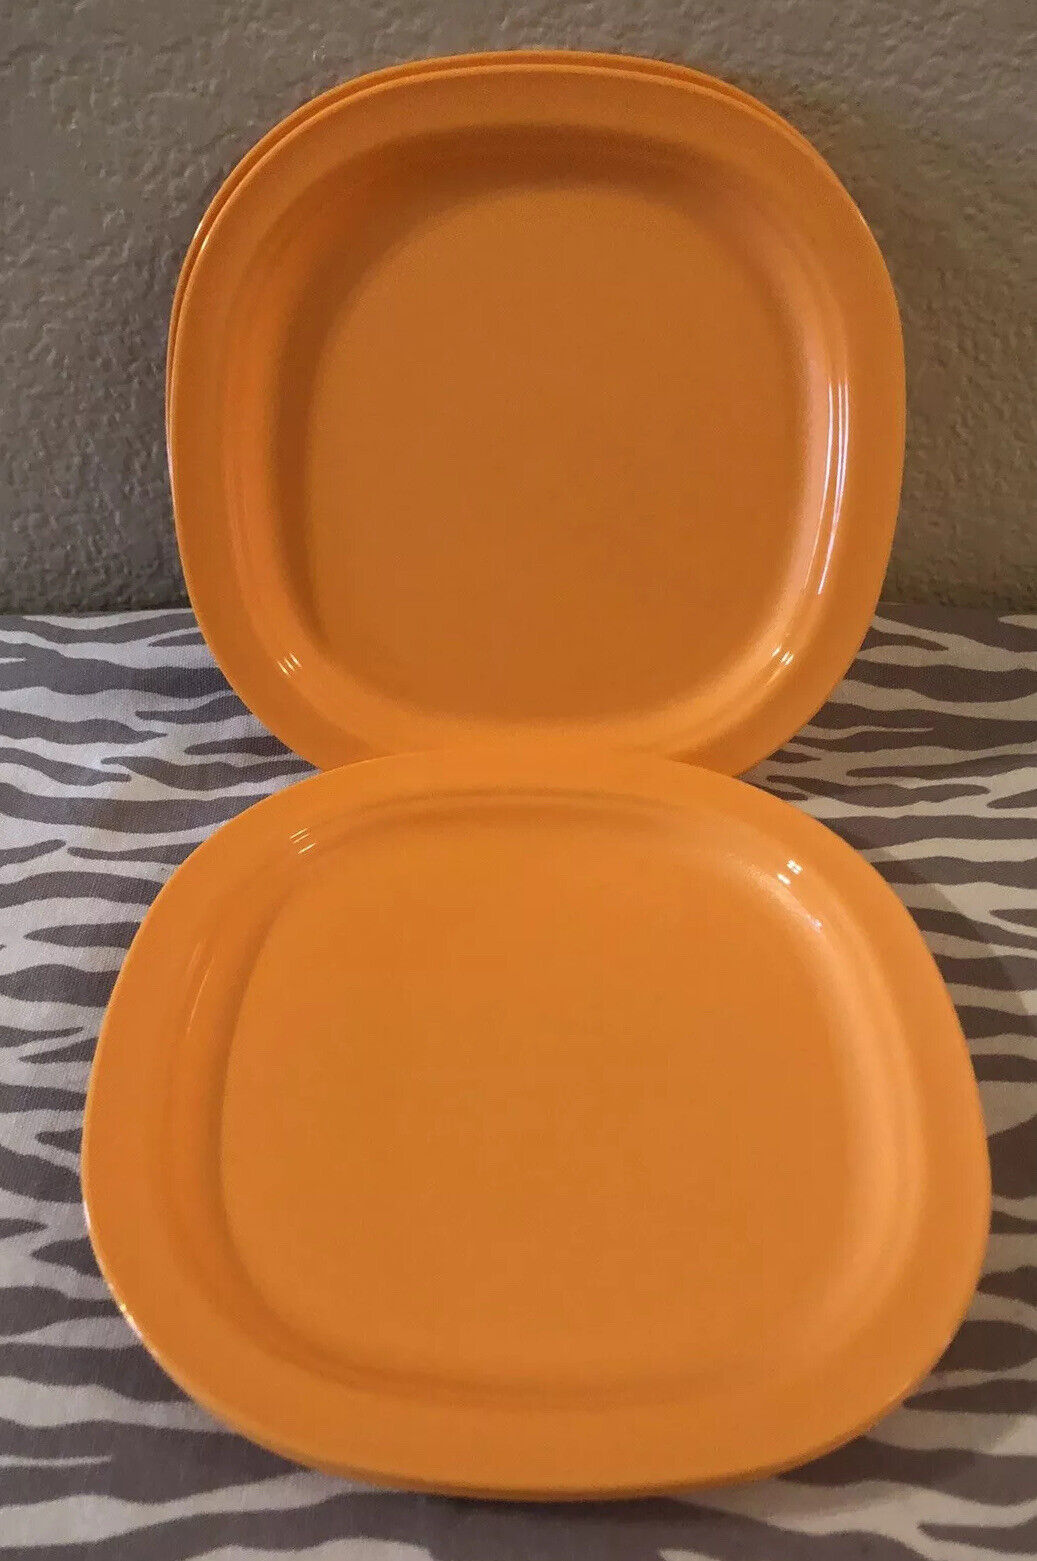 Tupperware Luncheon Plates Dessert Plates Set of 4 Orange 7 3/4” New Tupperware